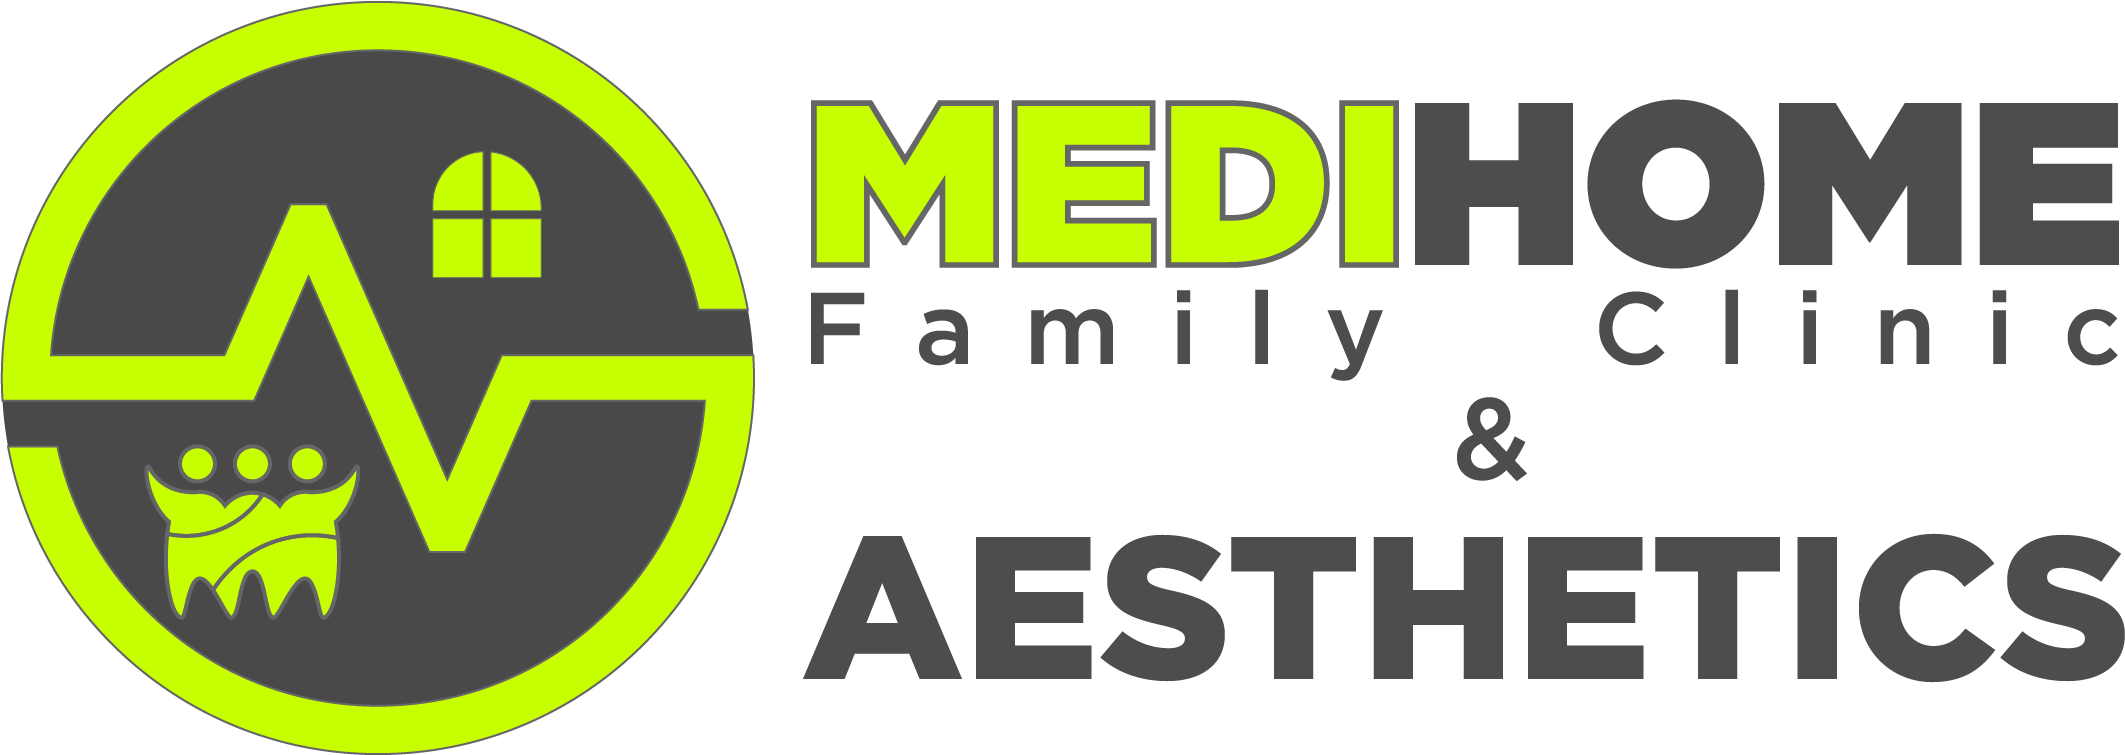 MediHome - Family Clinic